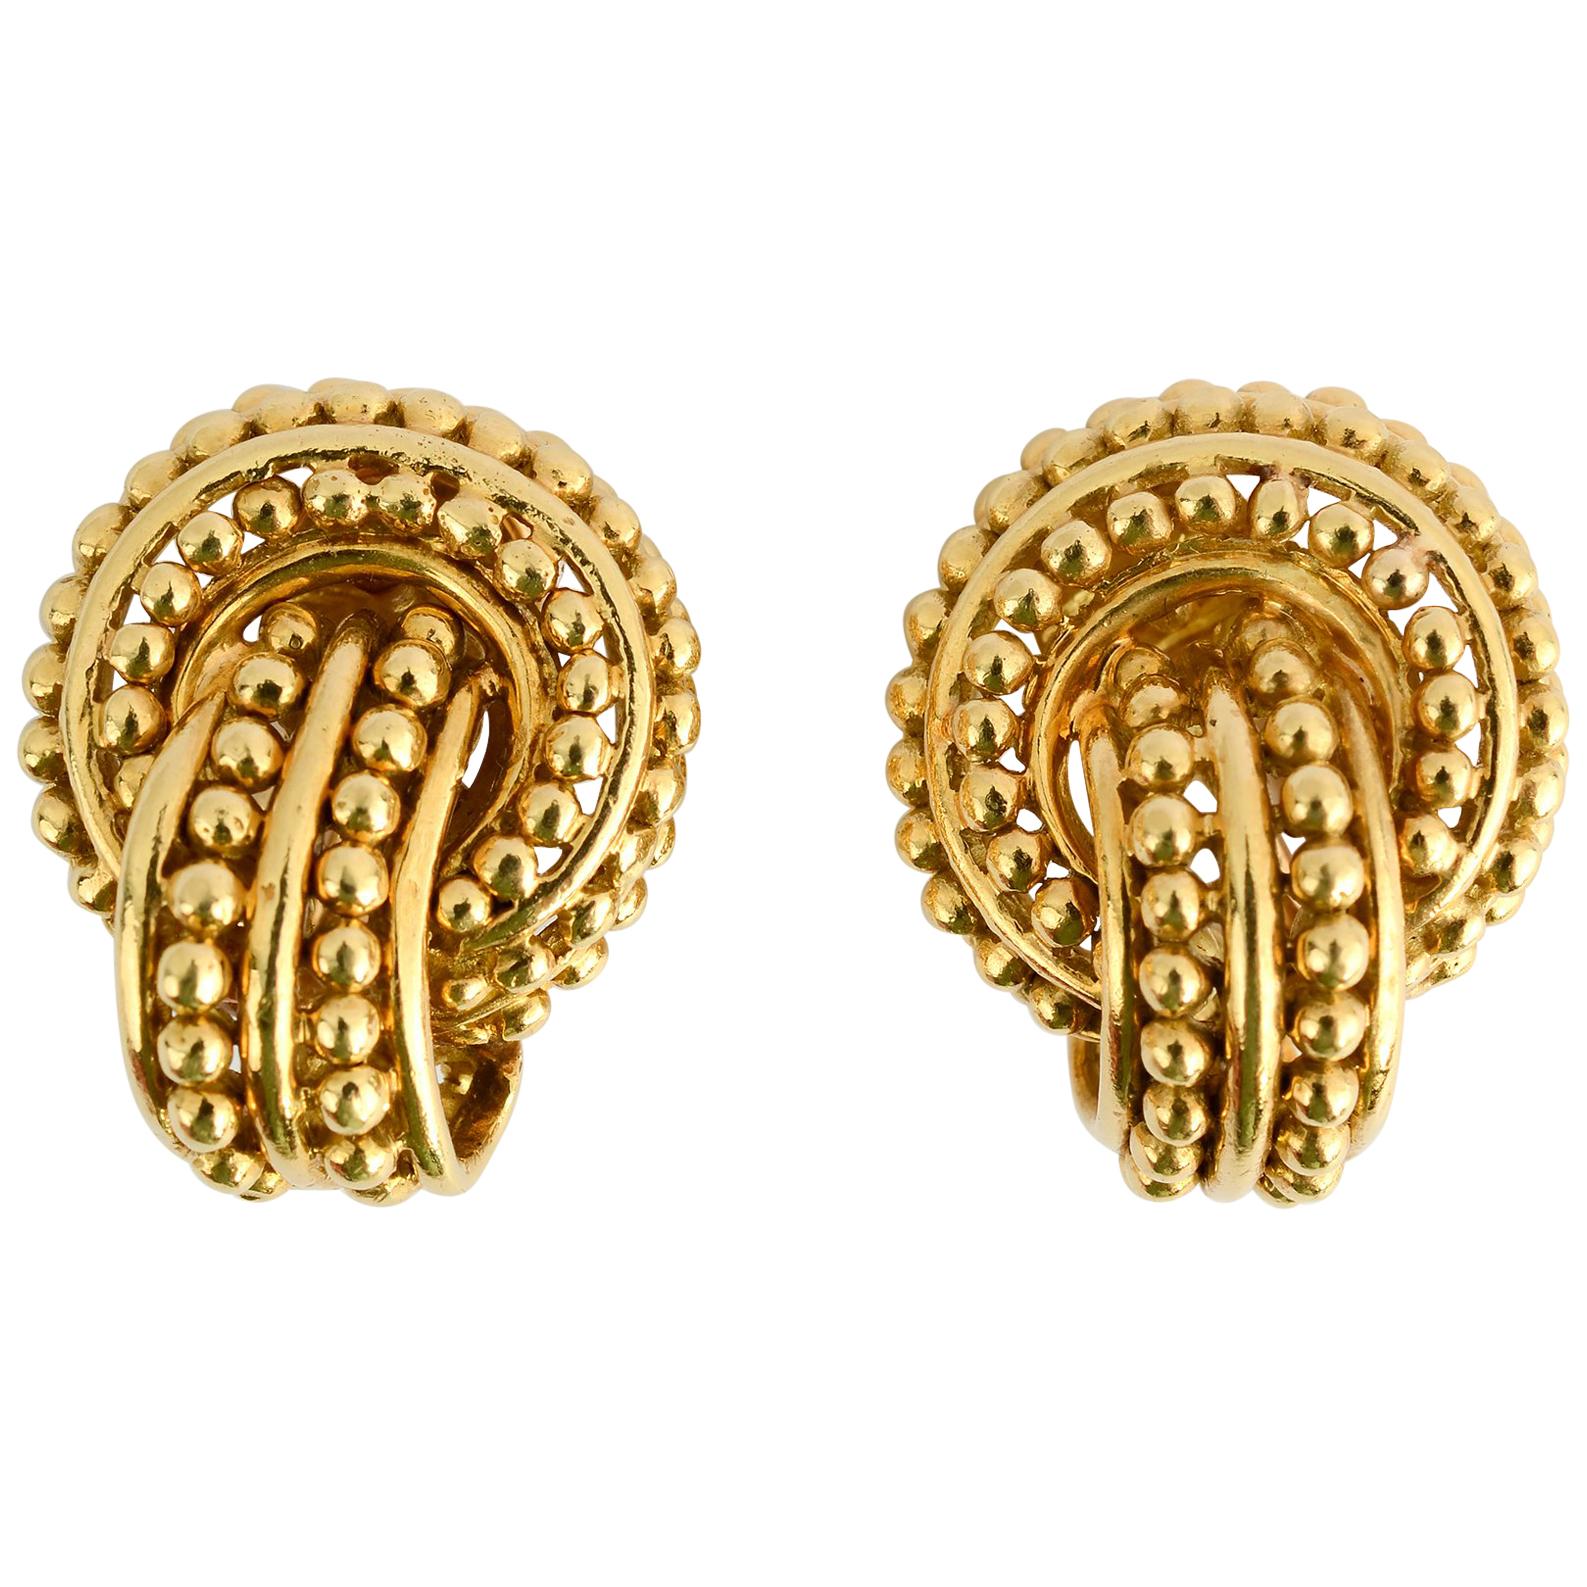 Tiffany & Co. Beaded Gold Knot Earrings